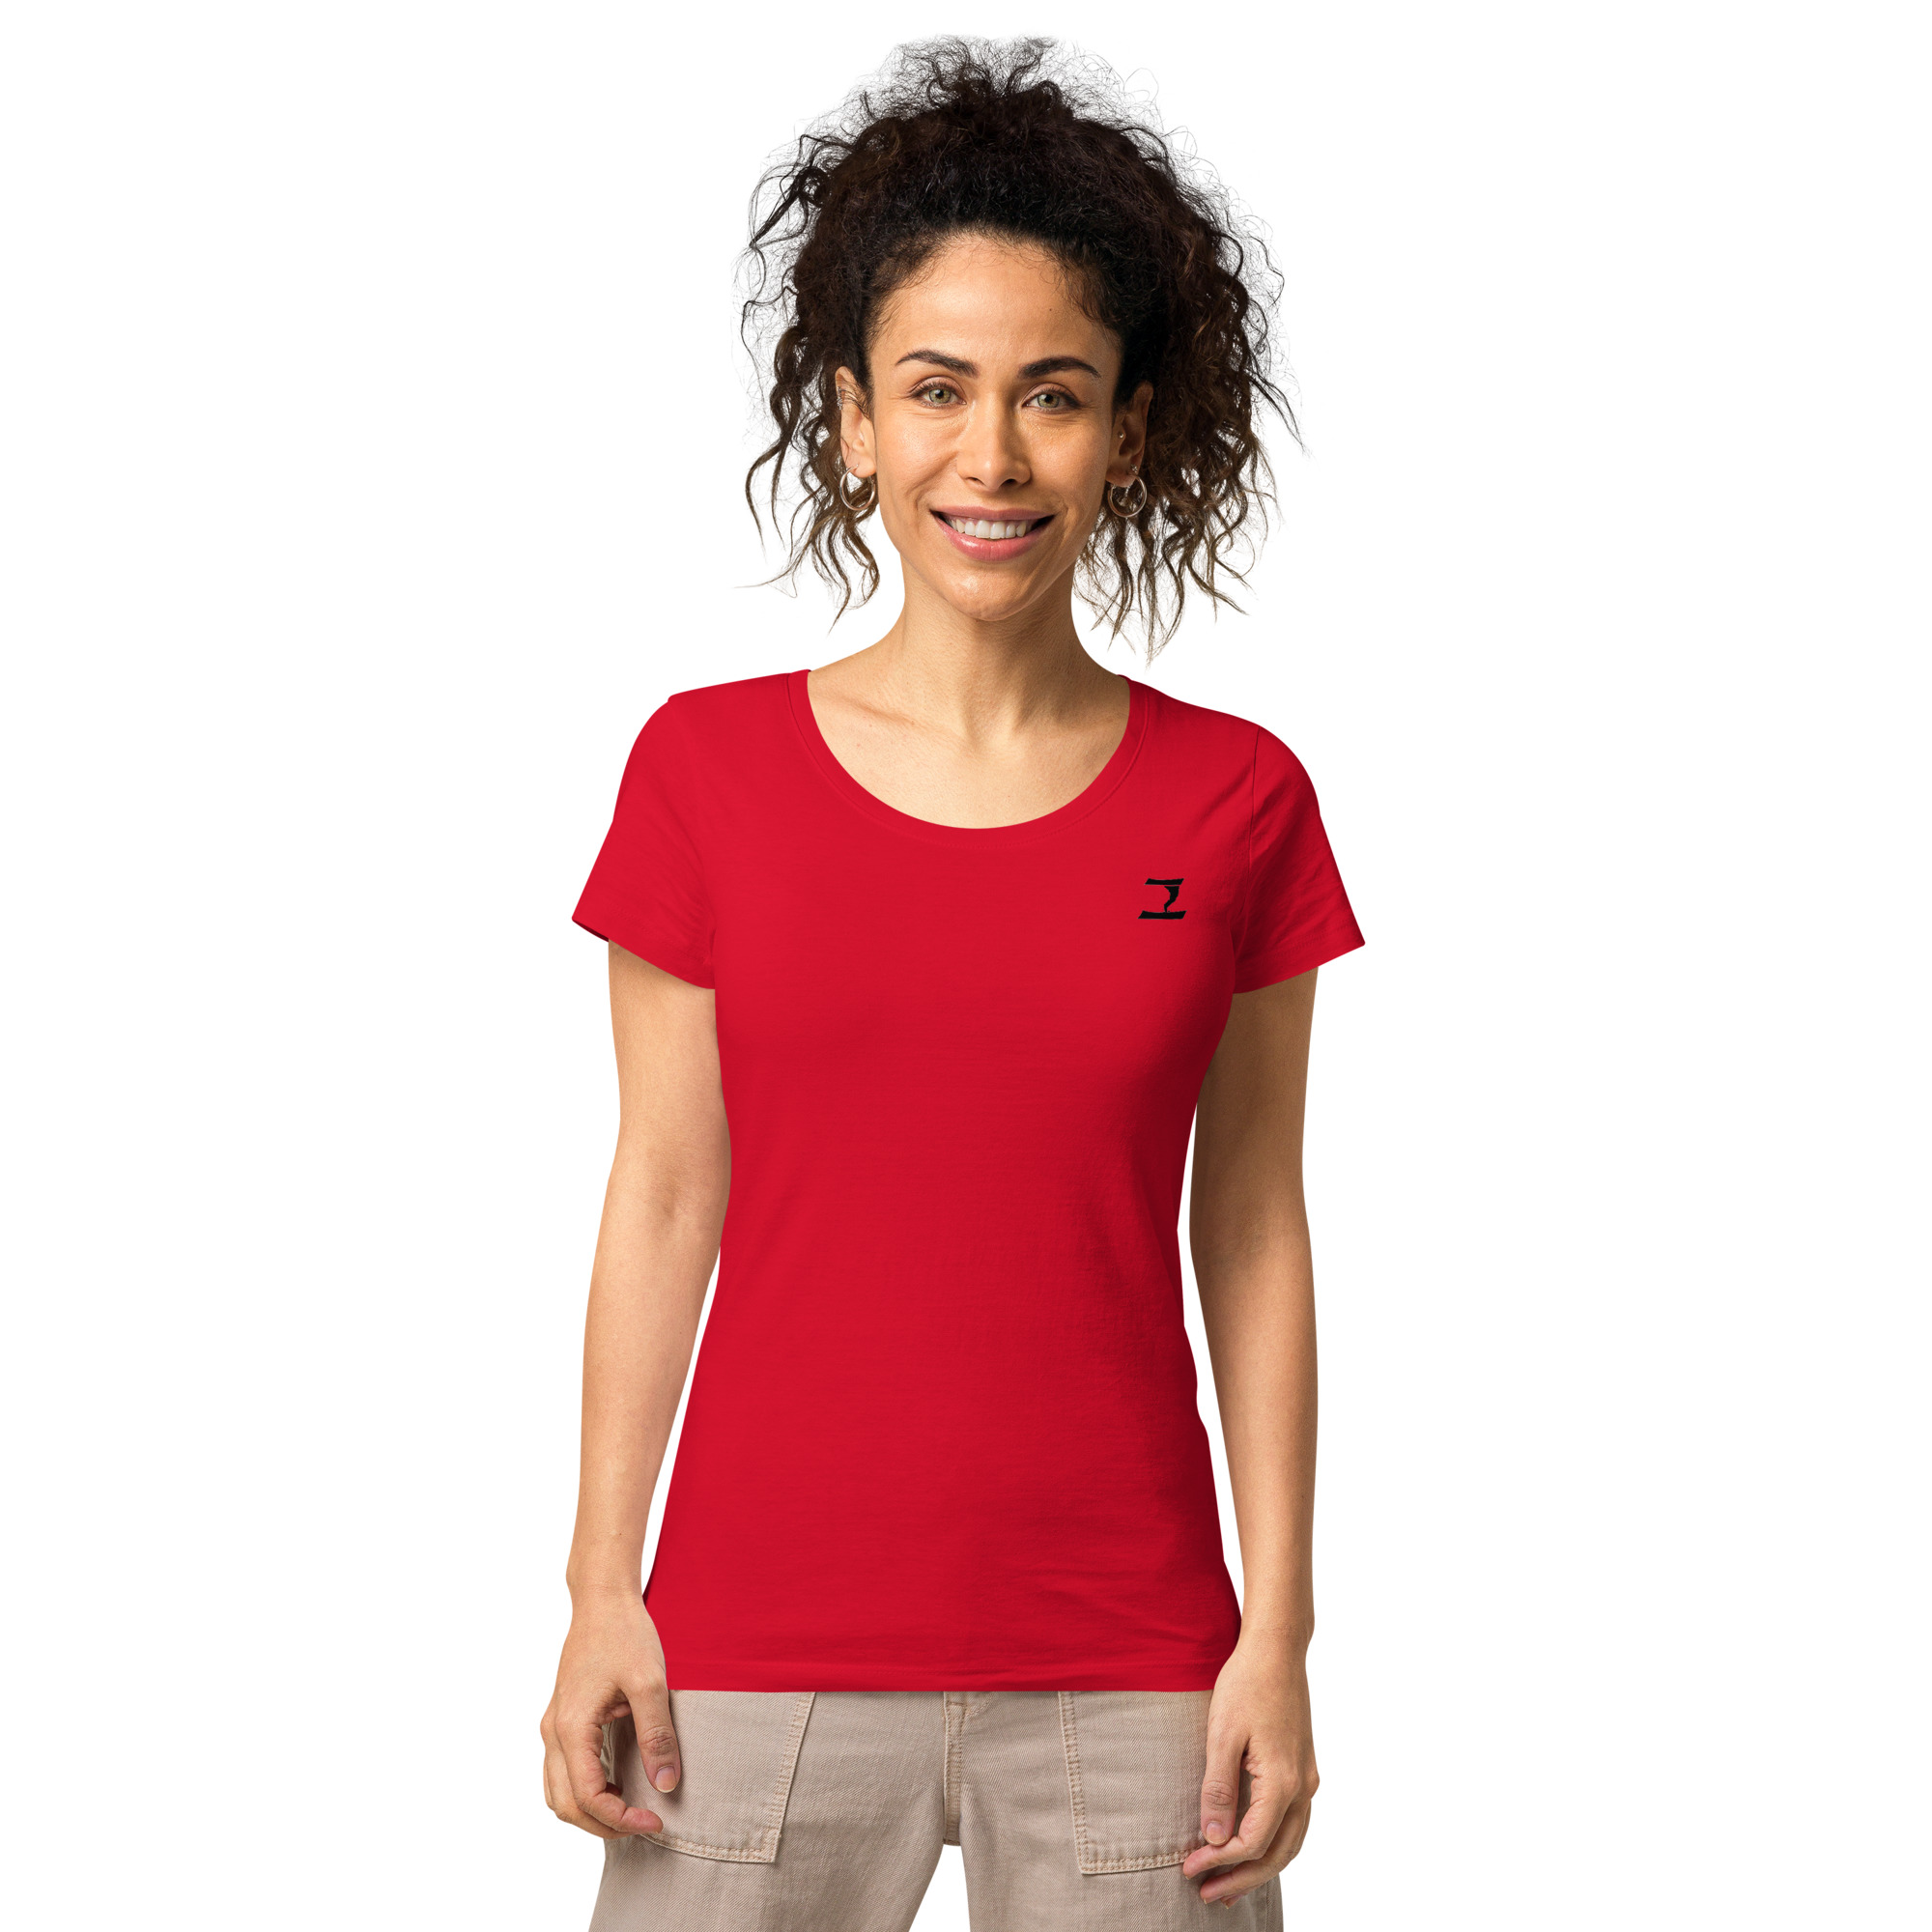 womens-basic-organic-t-shirt-red-front-6316953757be9.jpg